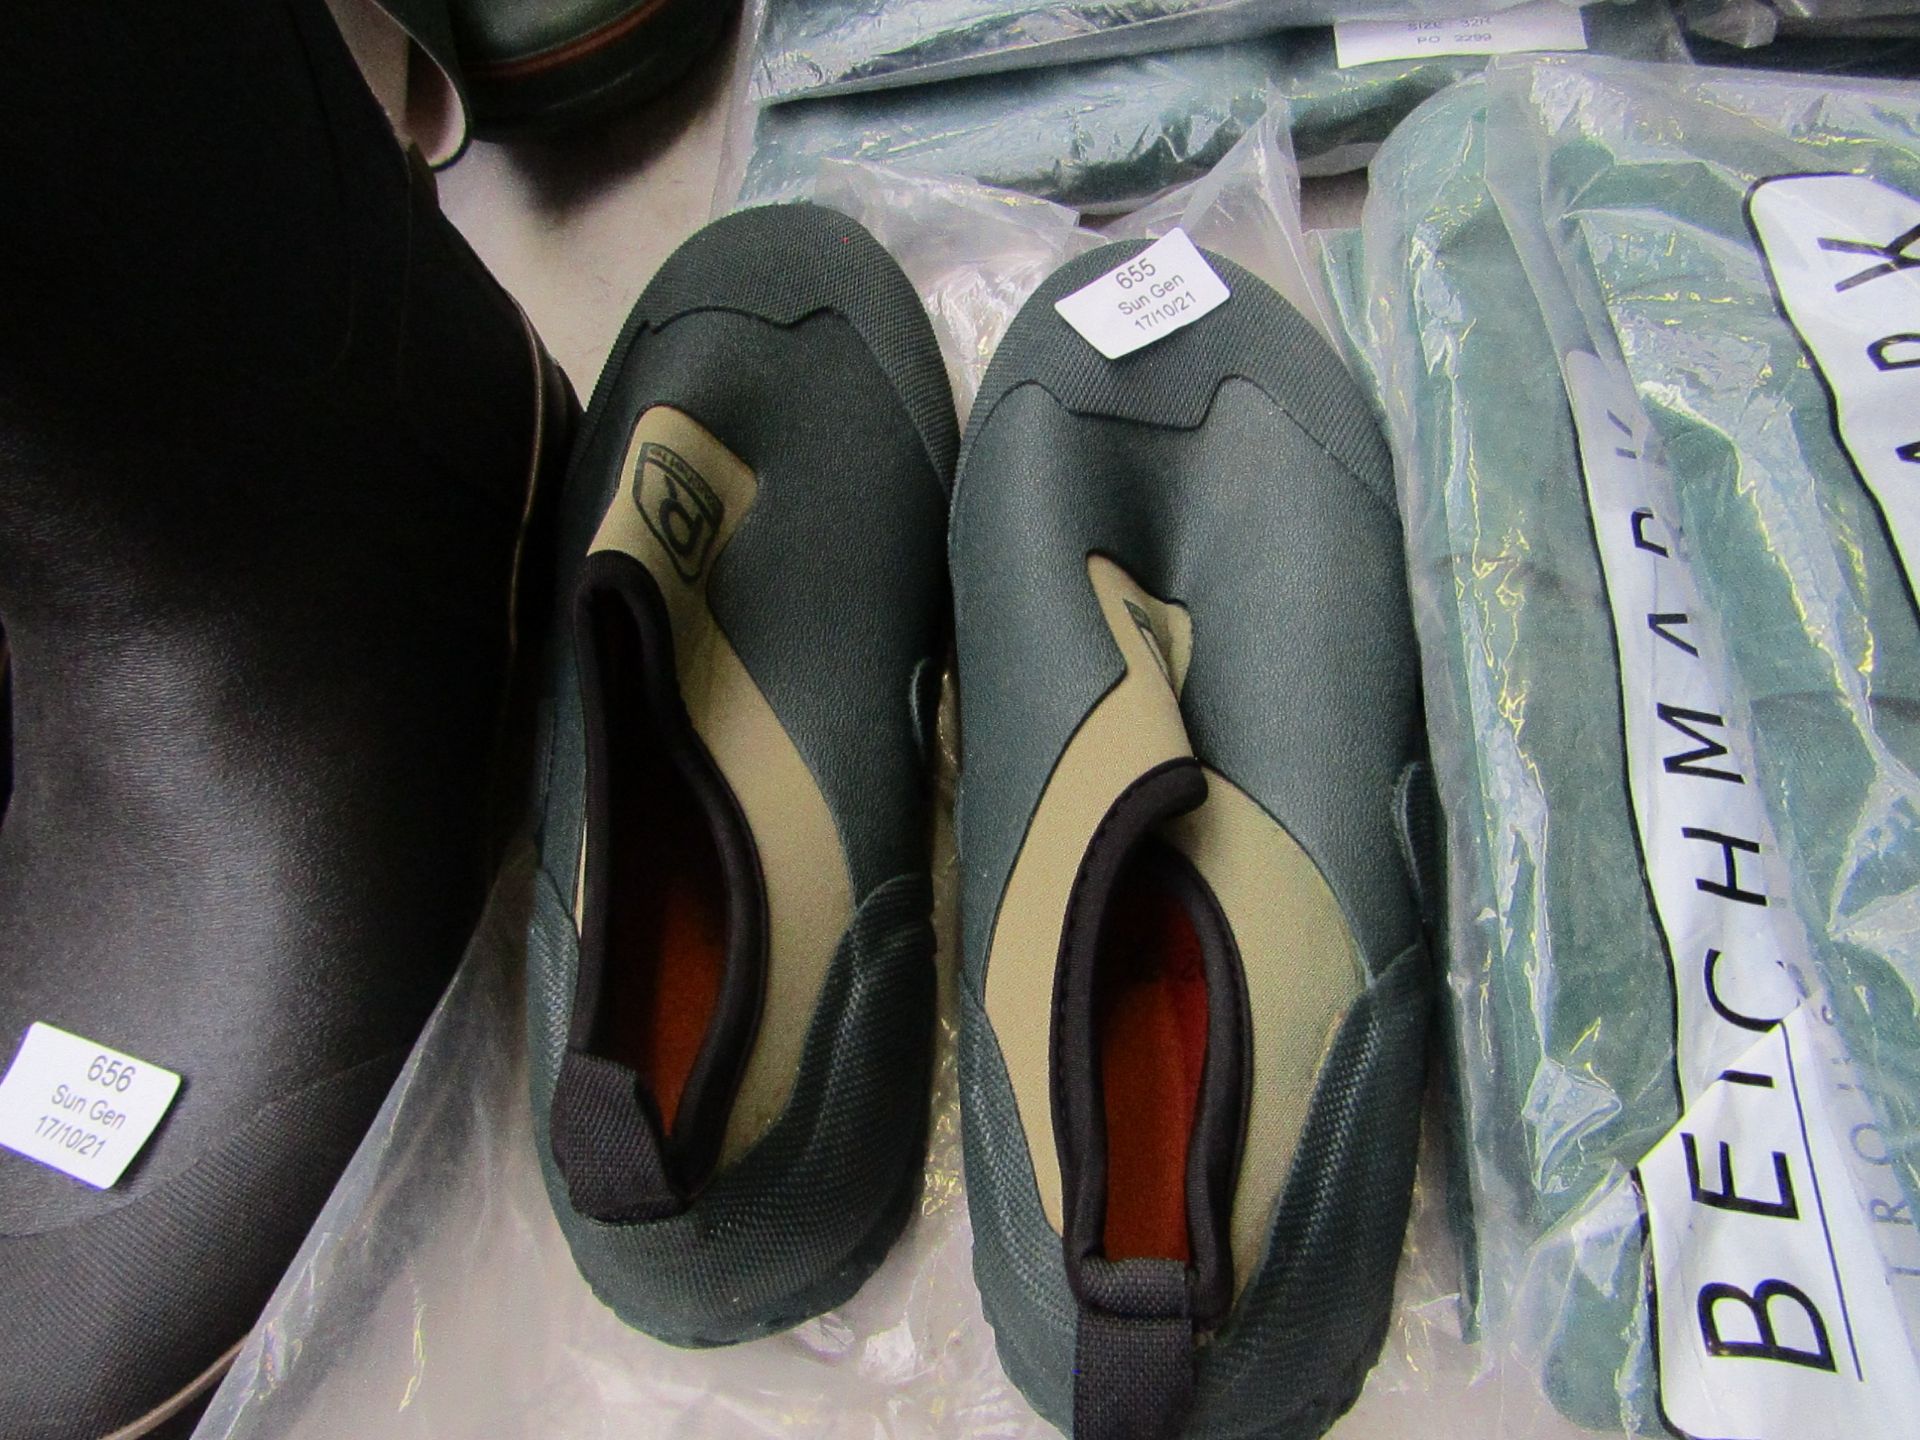 1x rouchette wellington shoes - size 41 - looks unused.